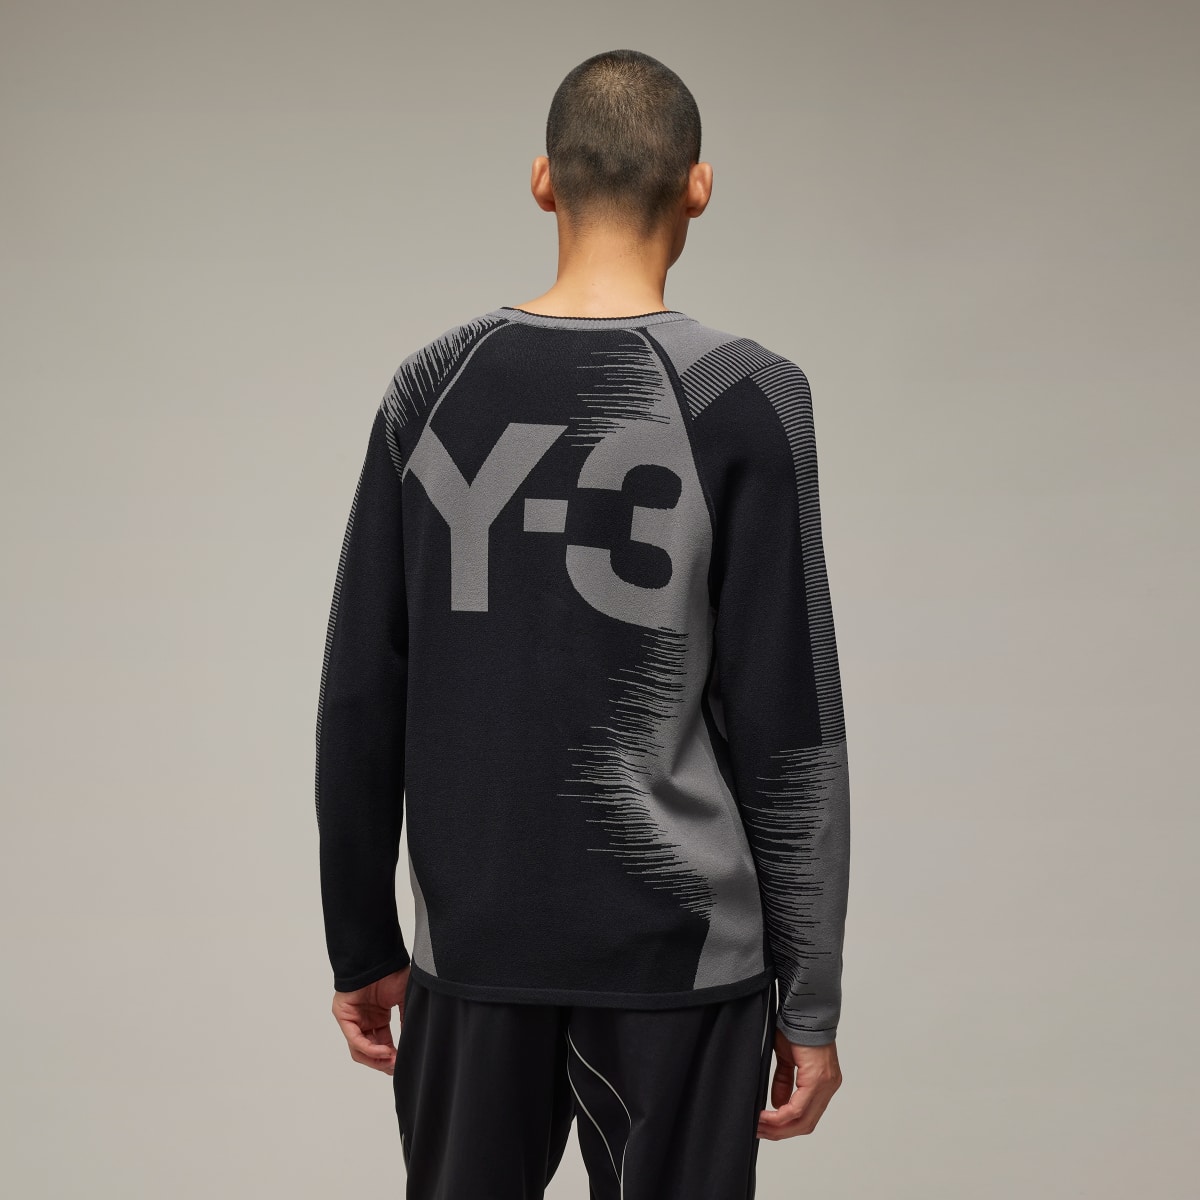 Adidas Y-3 Logo Knit Pullover. 3